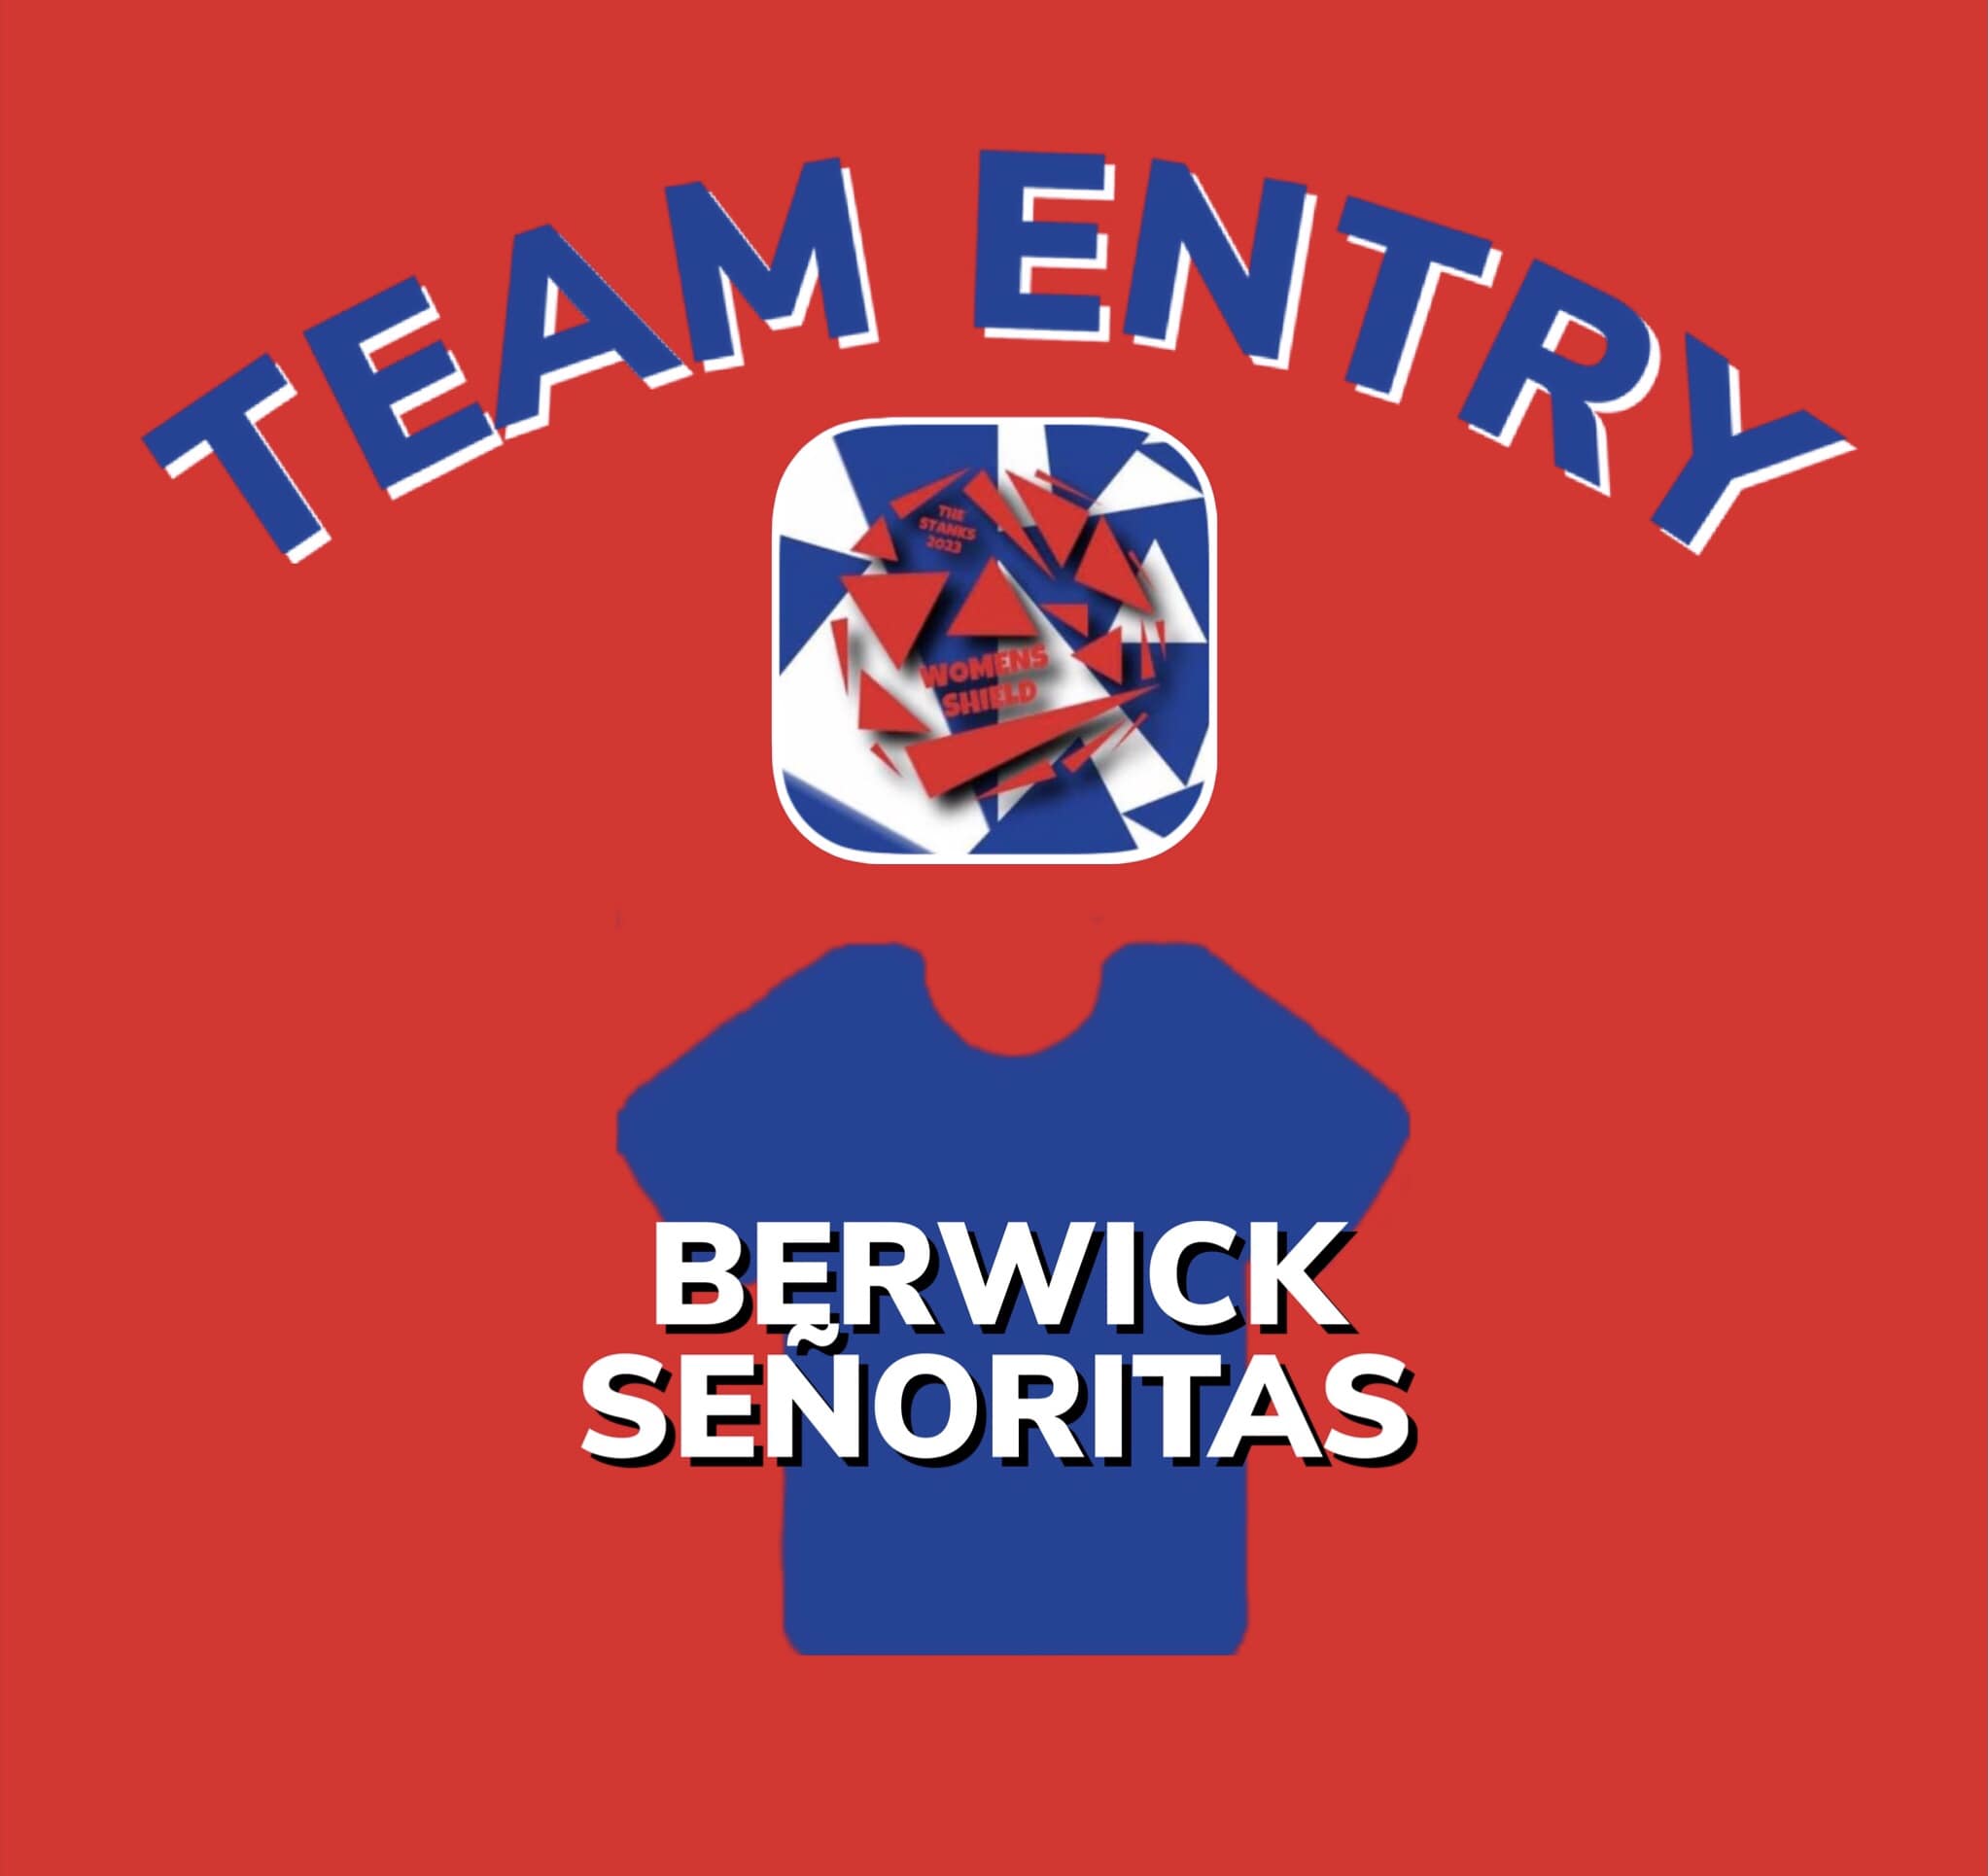 Berwick Senoritas